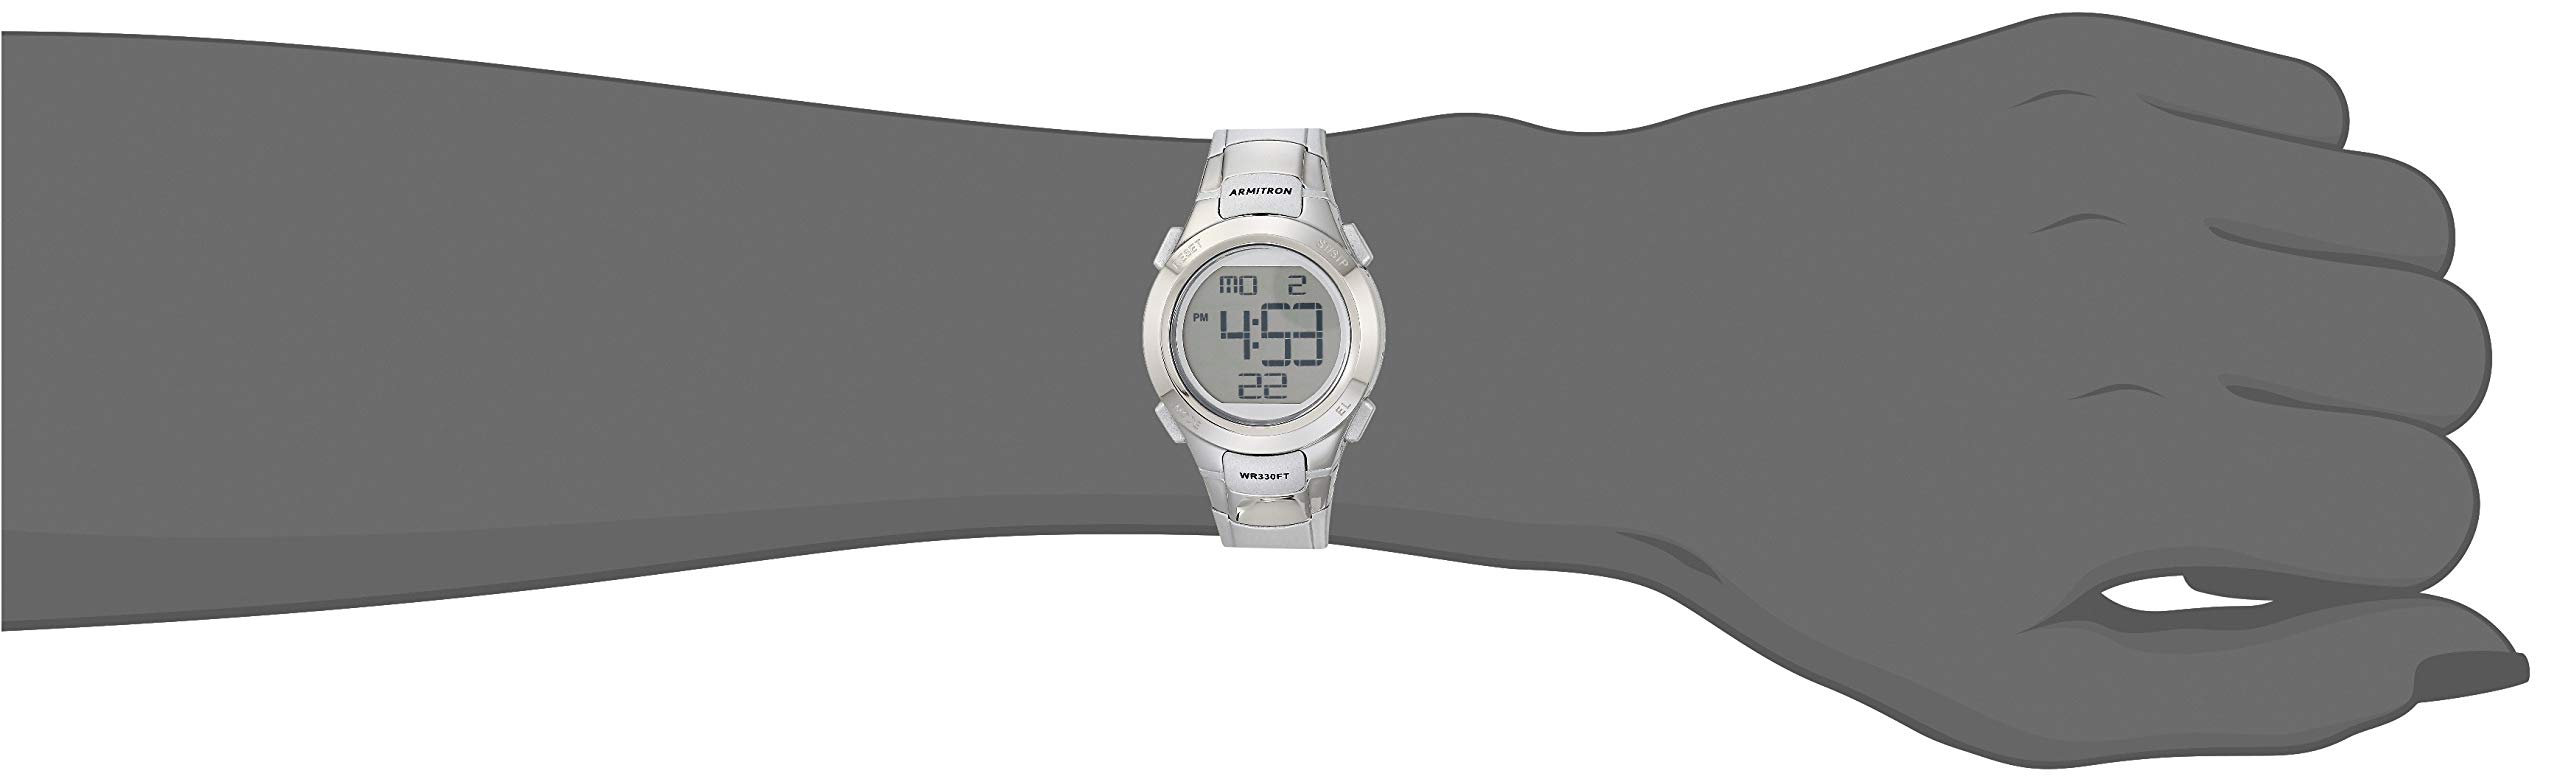 Armitron Sport Women's 45/7012 Digital Chronograph Resin Strap Watch